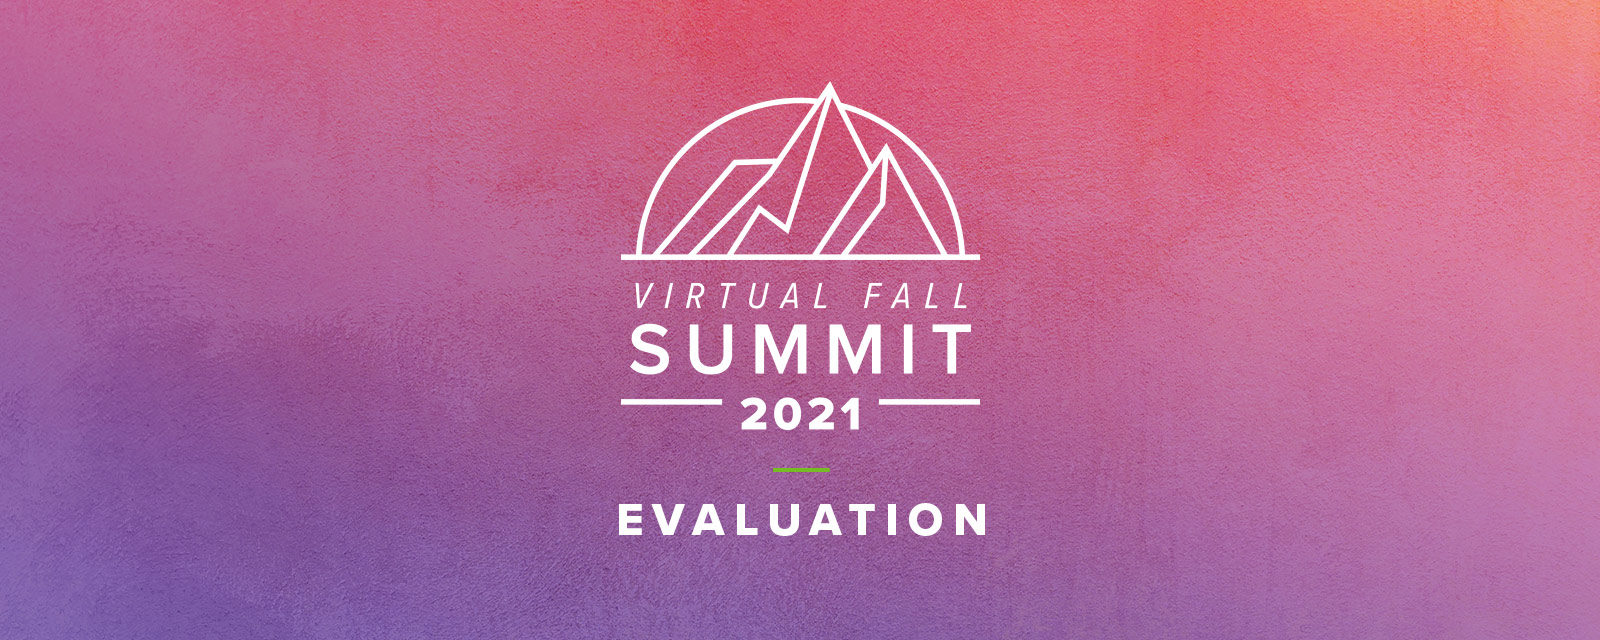 2021 RNS Virtual Fall Summit Evaluation